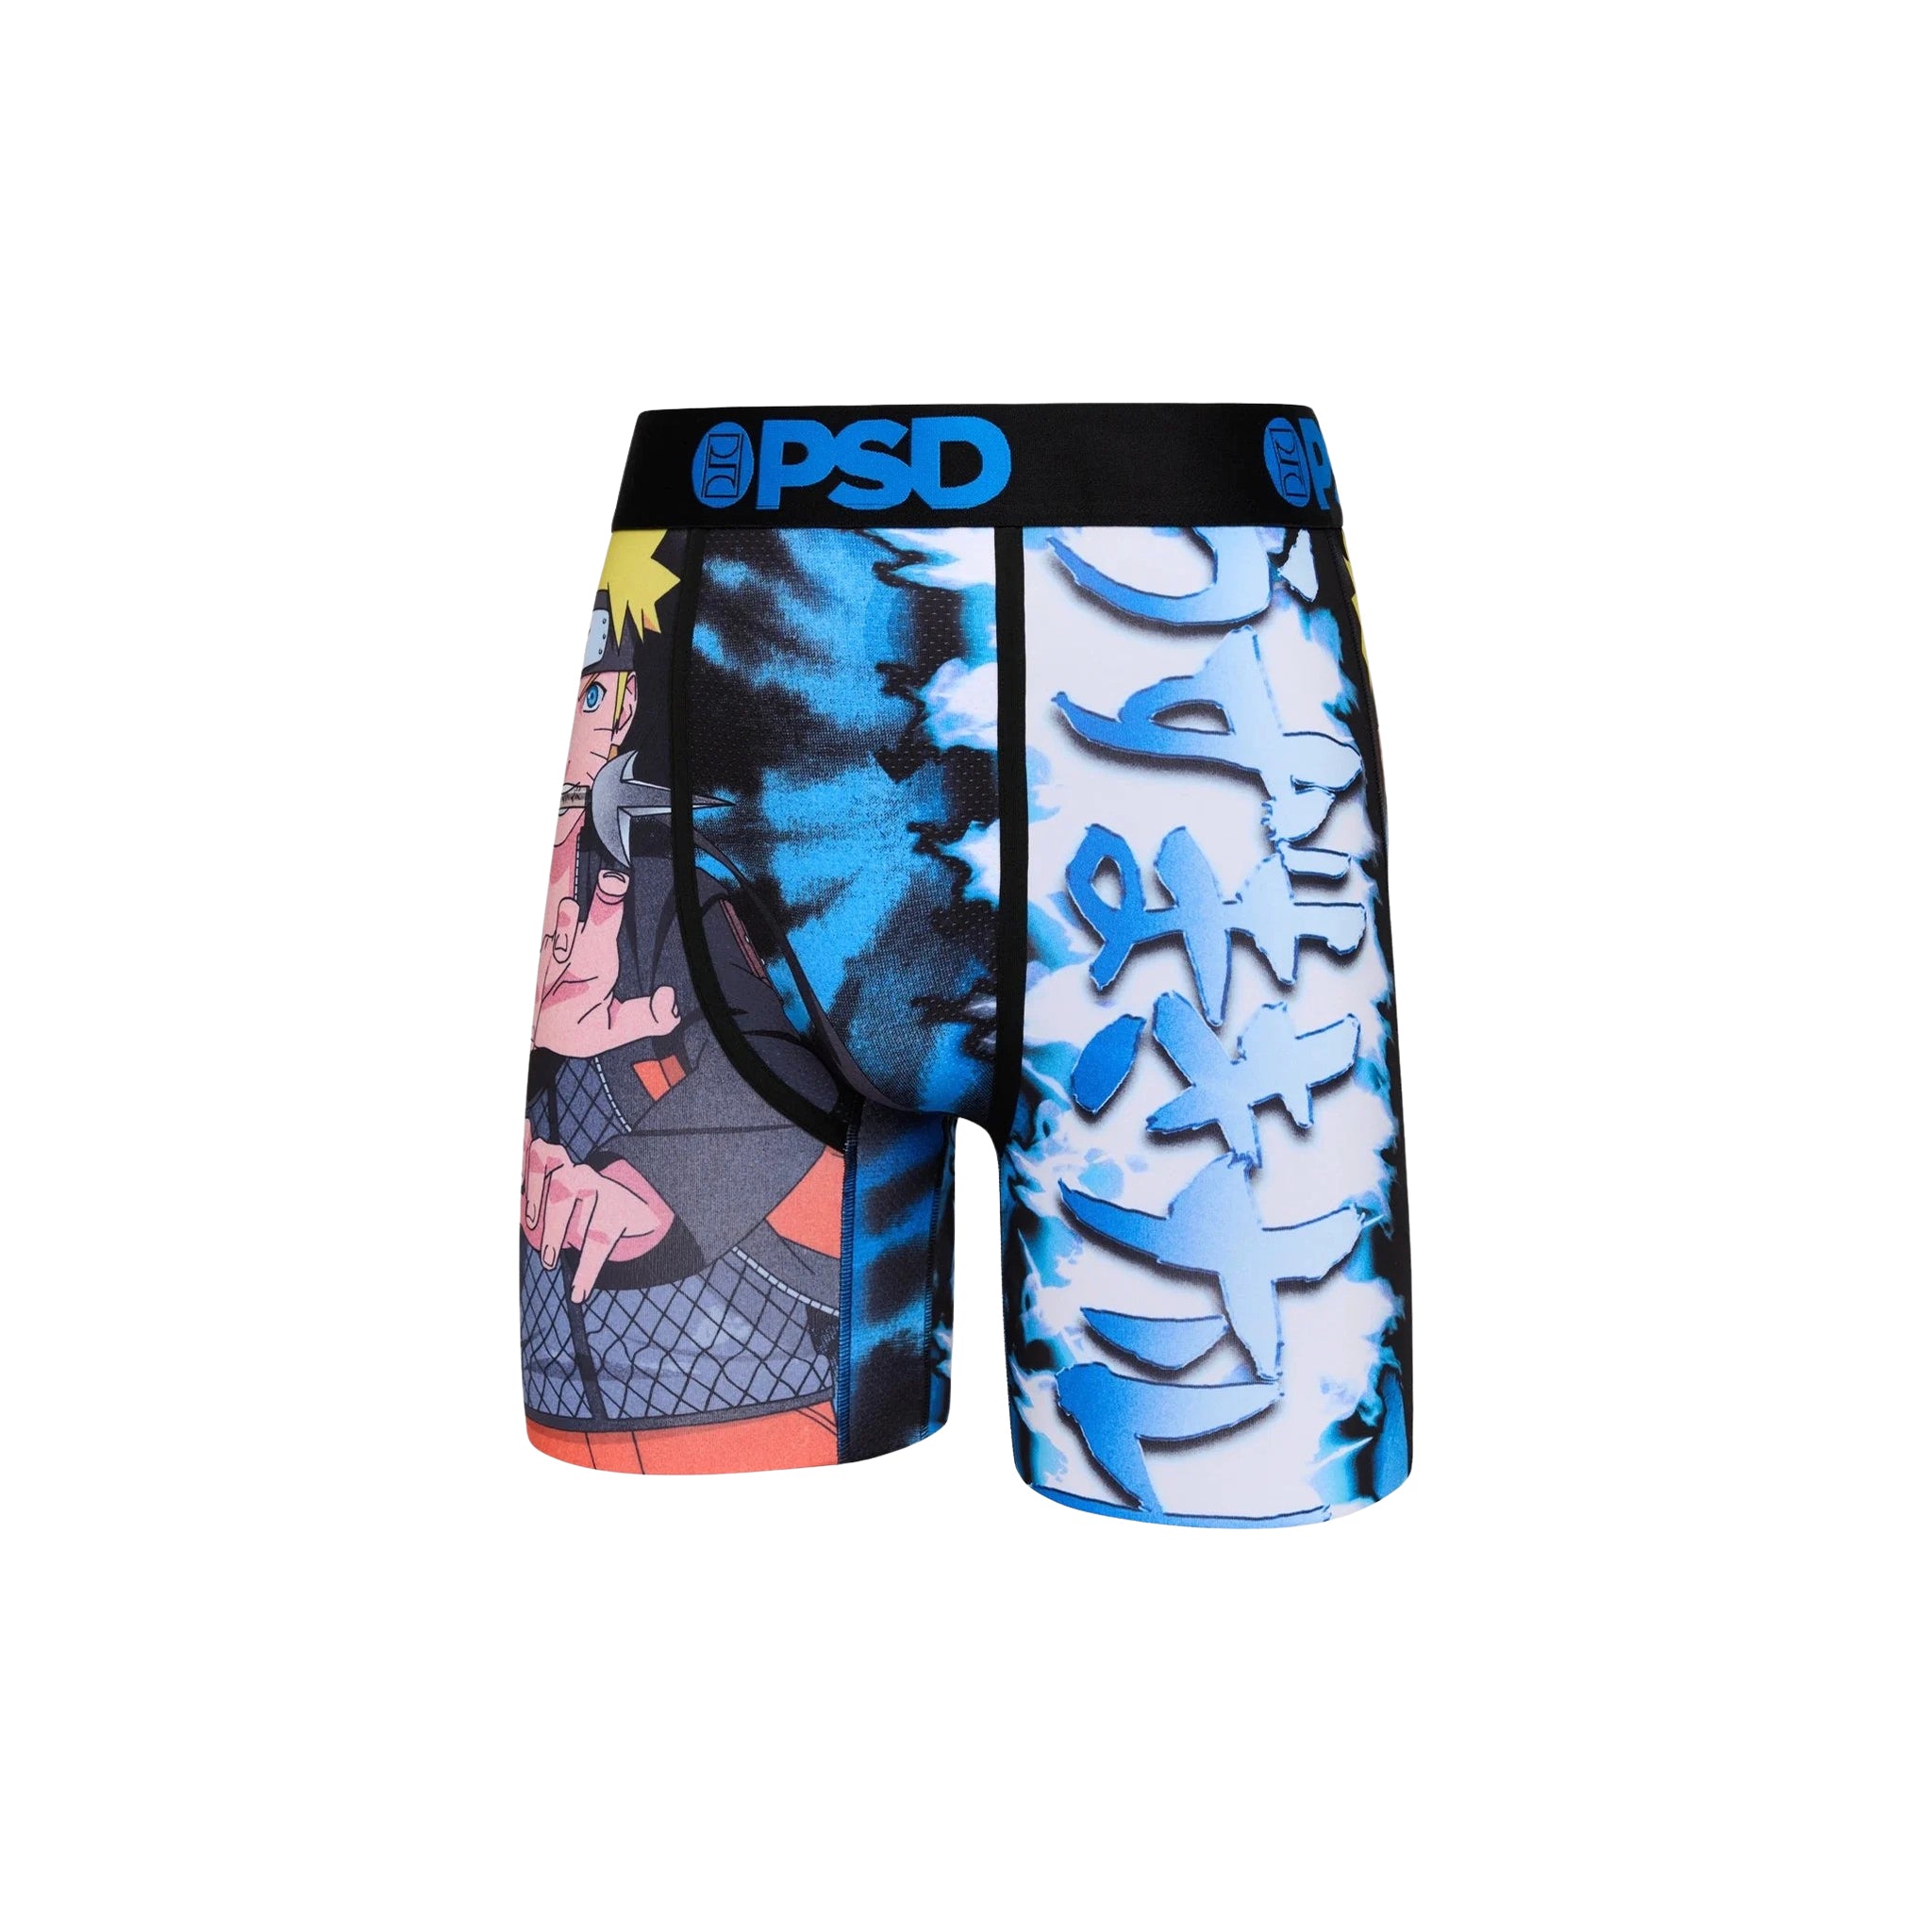 PSD "Naruto Cloud" Underwear